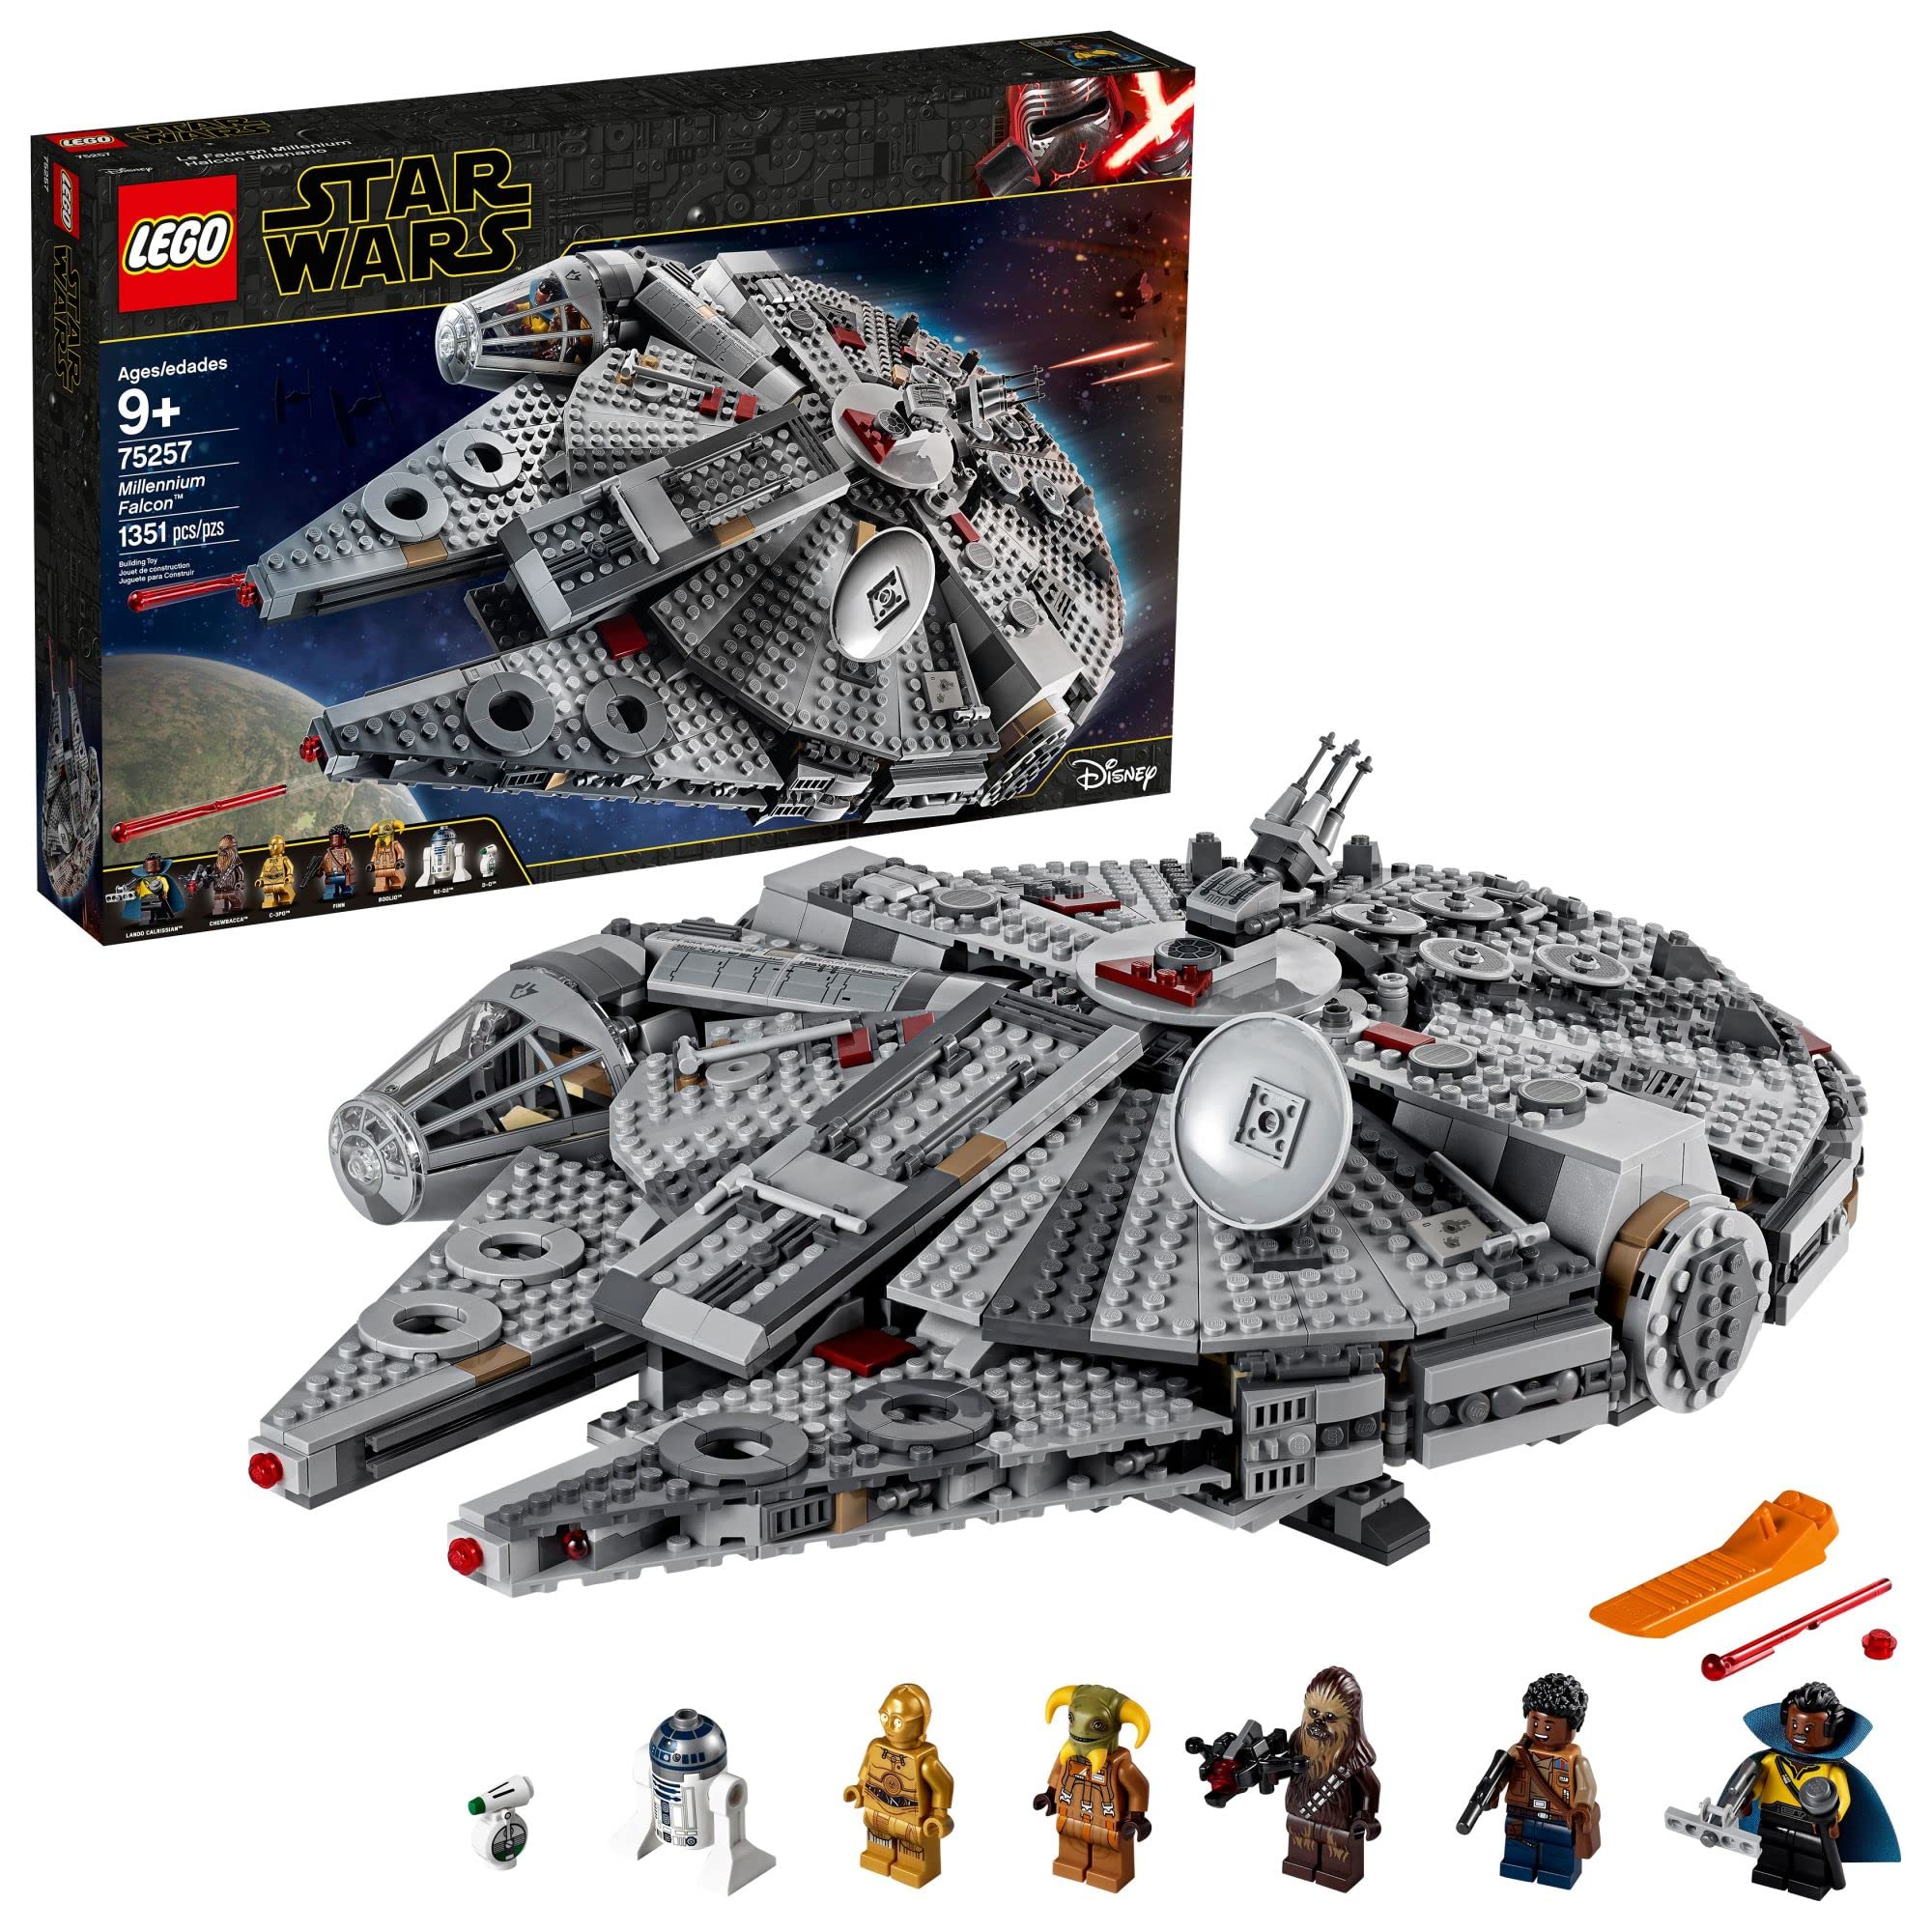 LEGO Star Wars Millennium Falcon 75257 Building Set $136 + Free Shipping